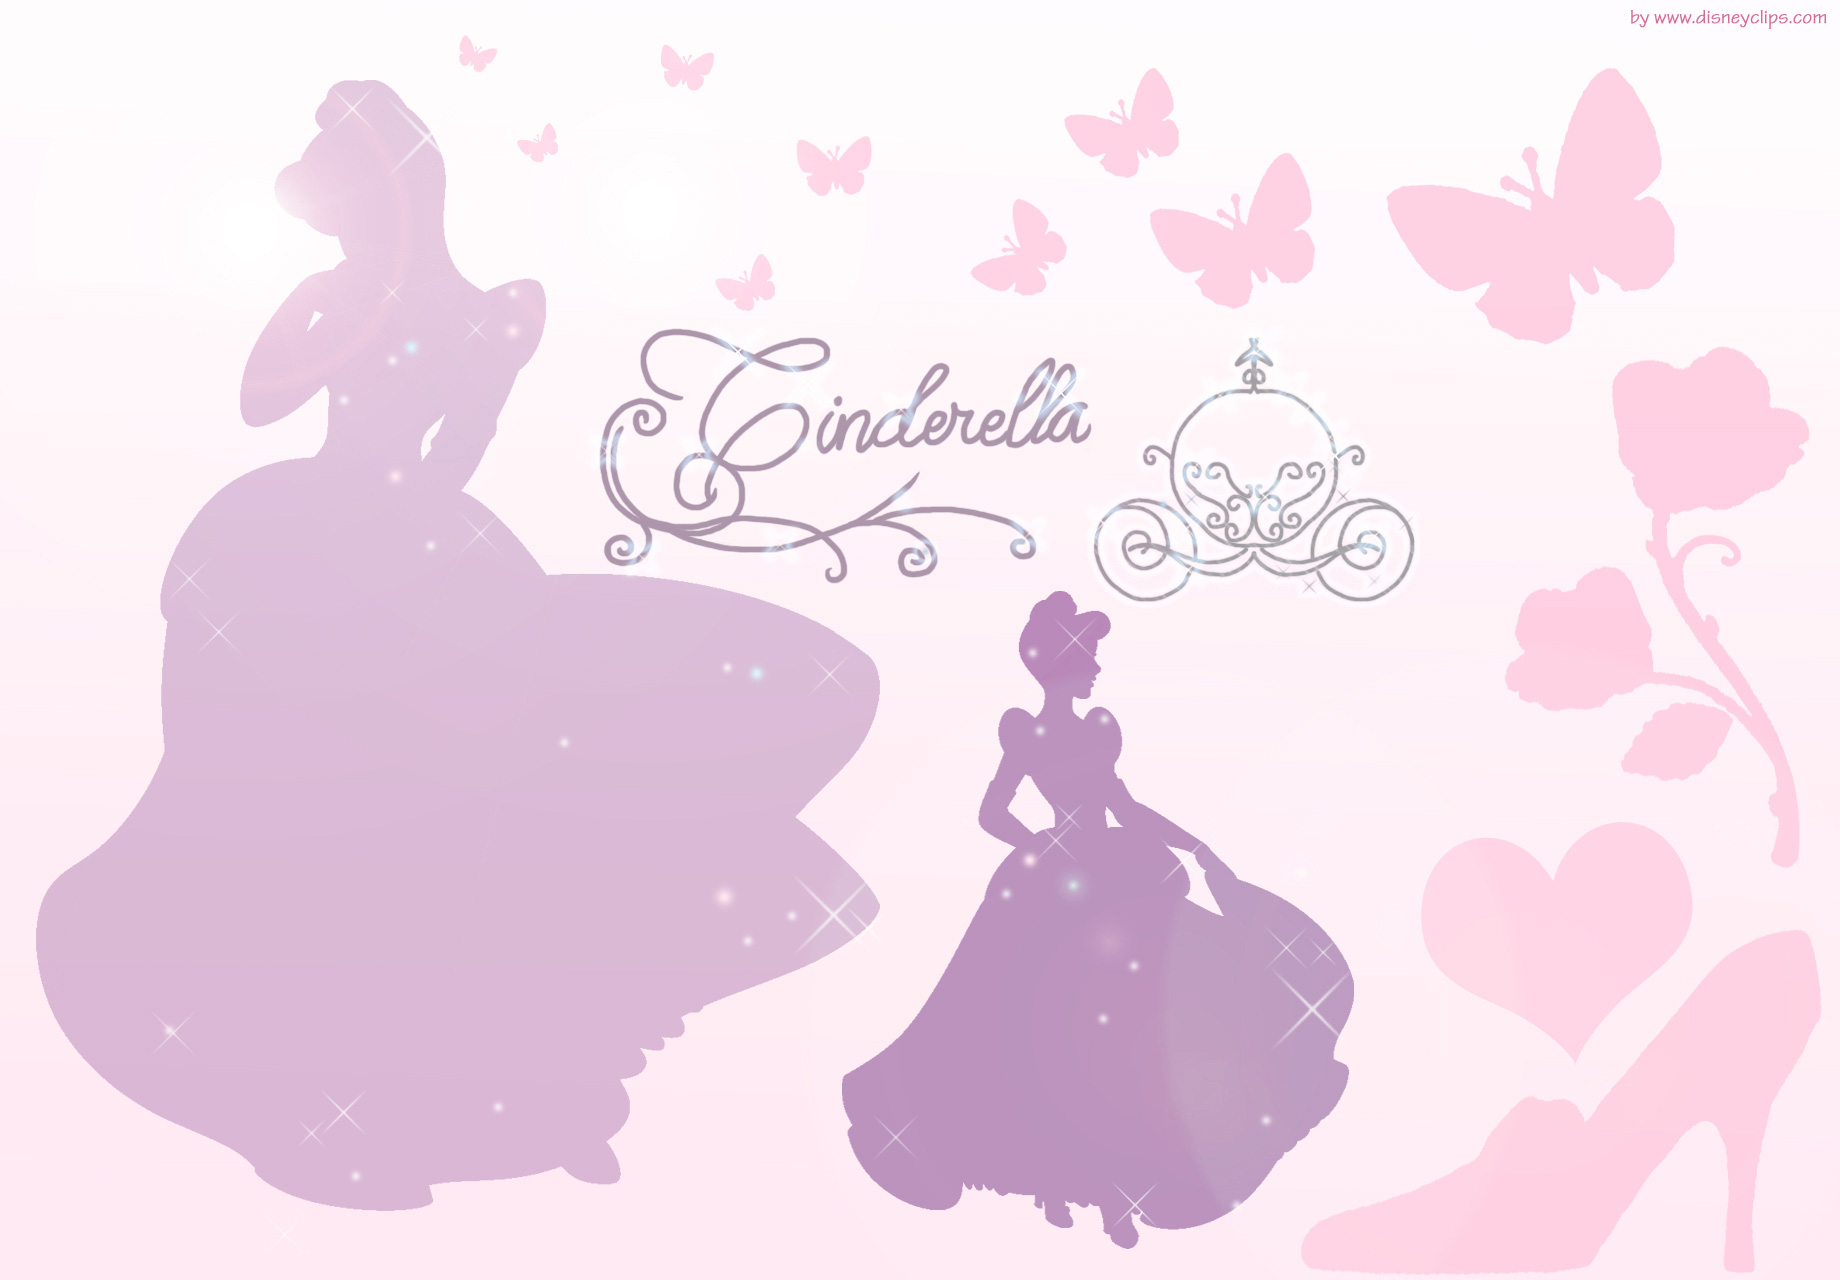 Cinderella wallpaper by georgekev  Download on ZEDGE  b124